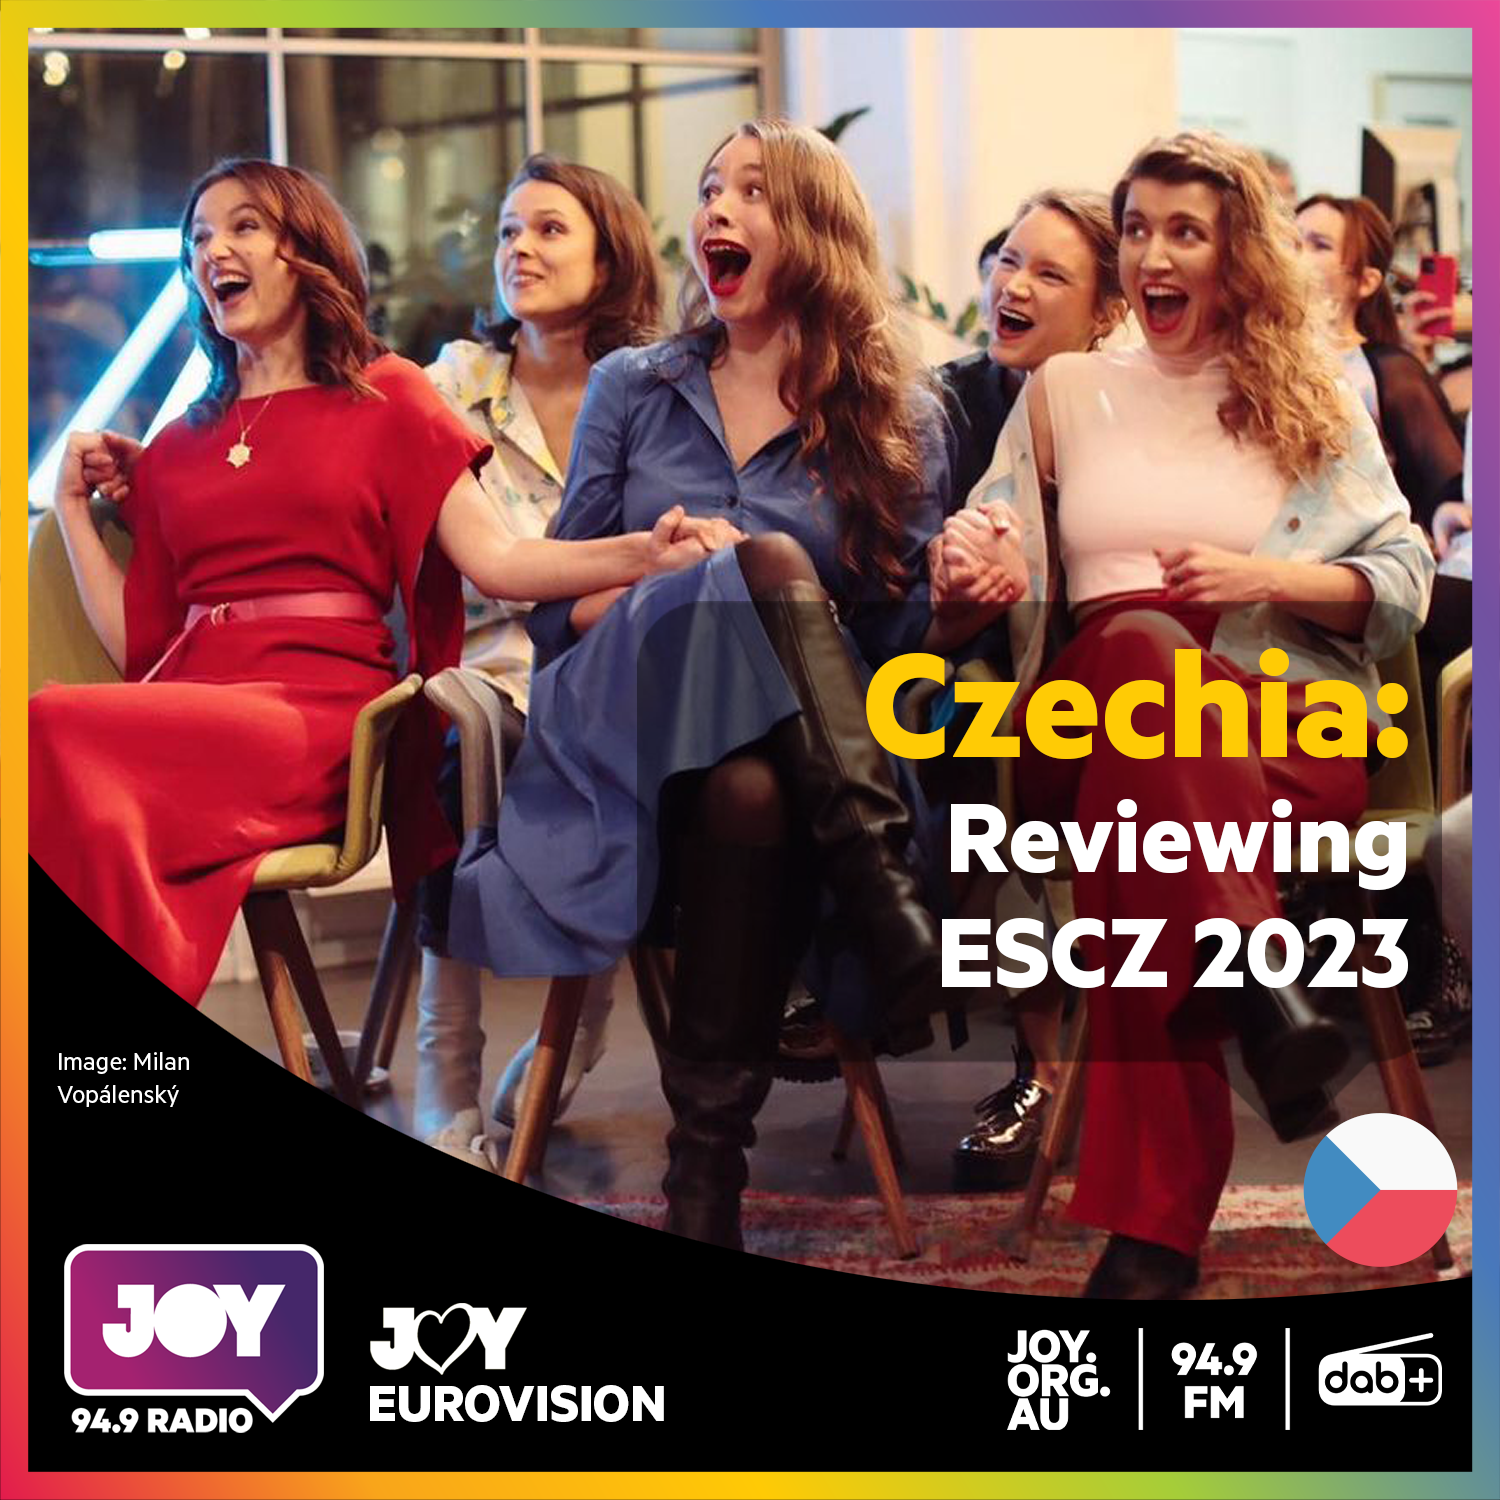 🇨🇿 Reviewing ESCZ 2023: Czechia’s newest coronation ball